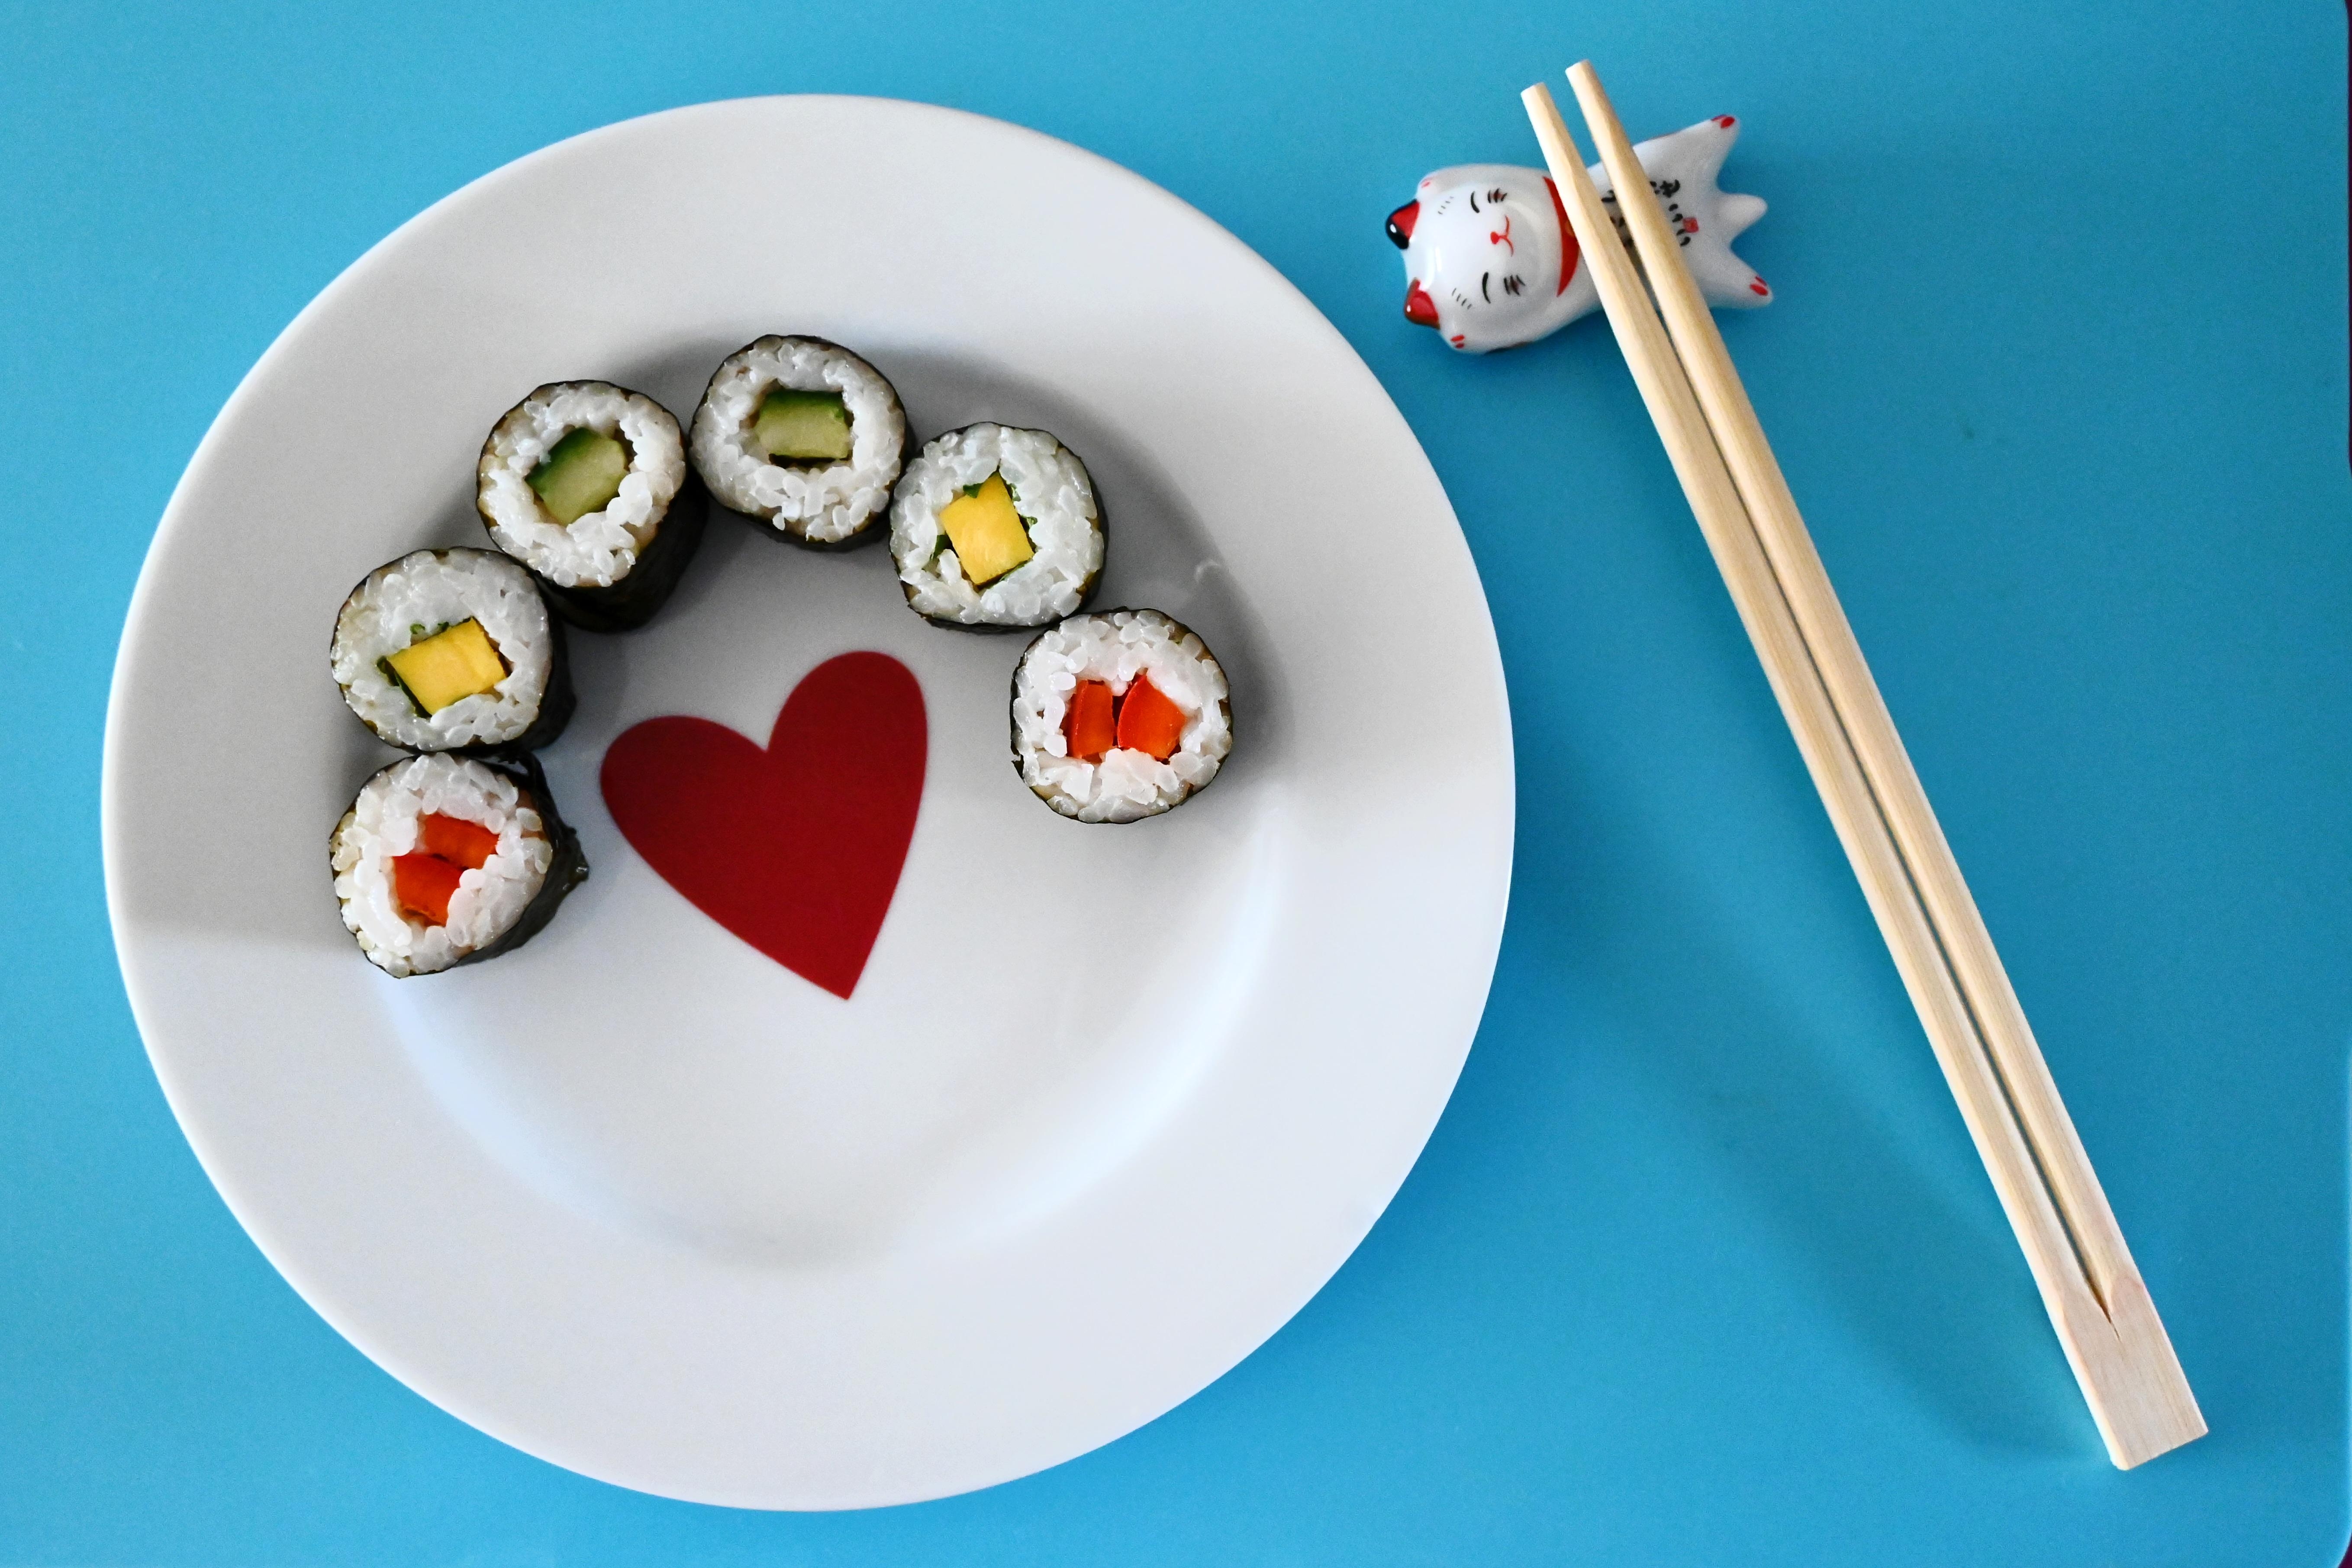 Veggie Sushi #veggie #foodchallenge
#manekineko #lovefood